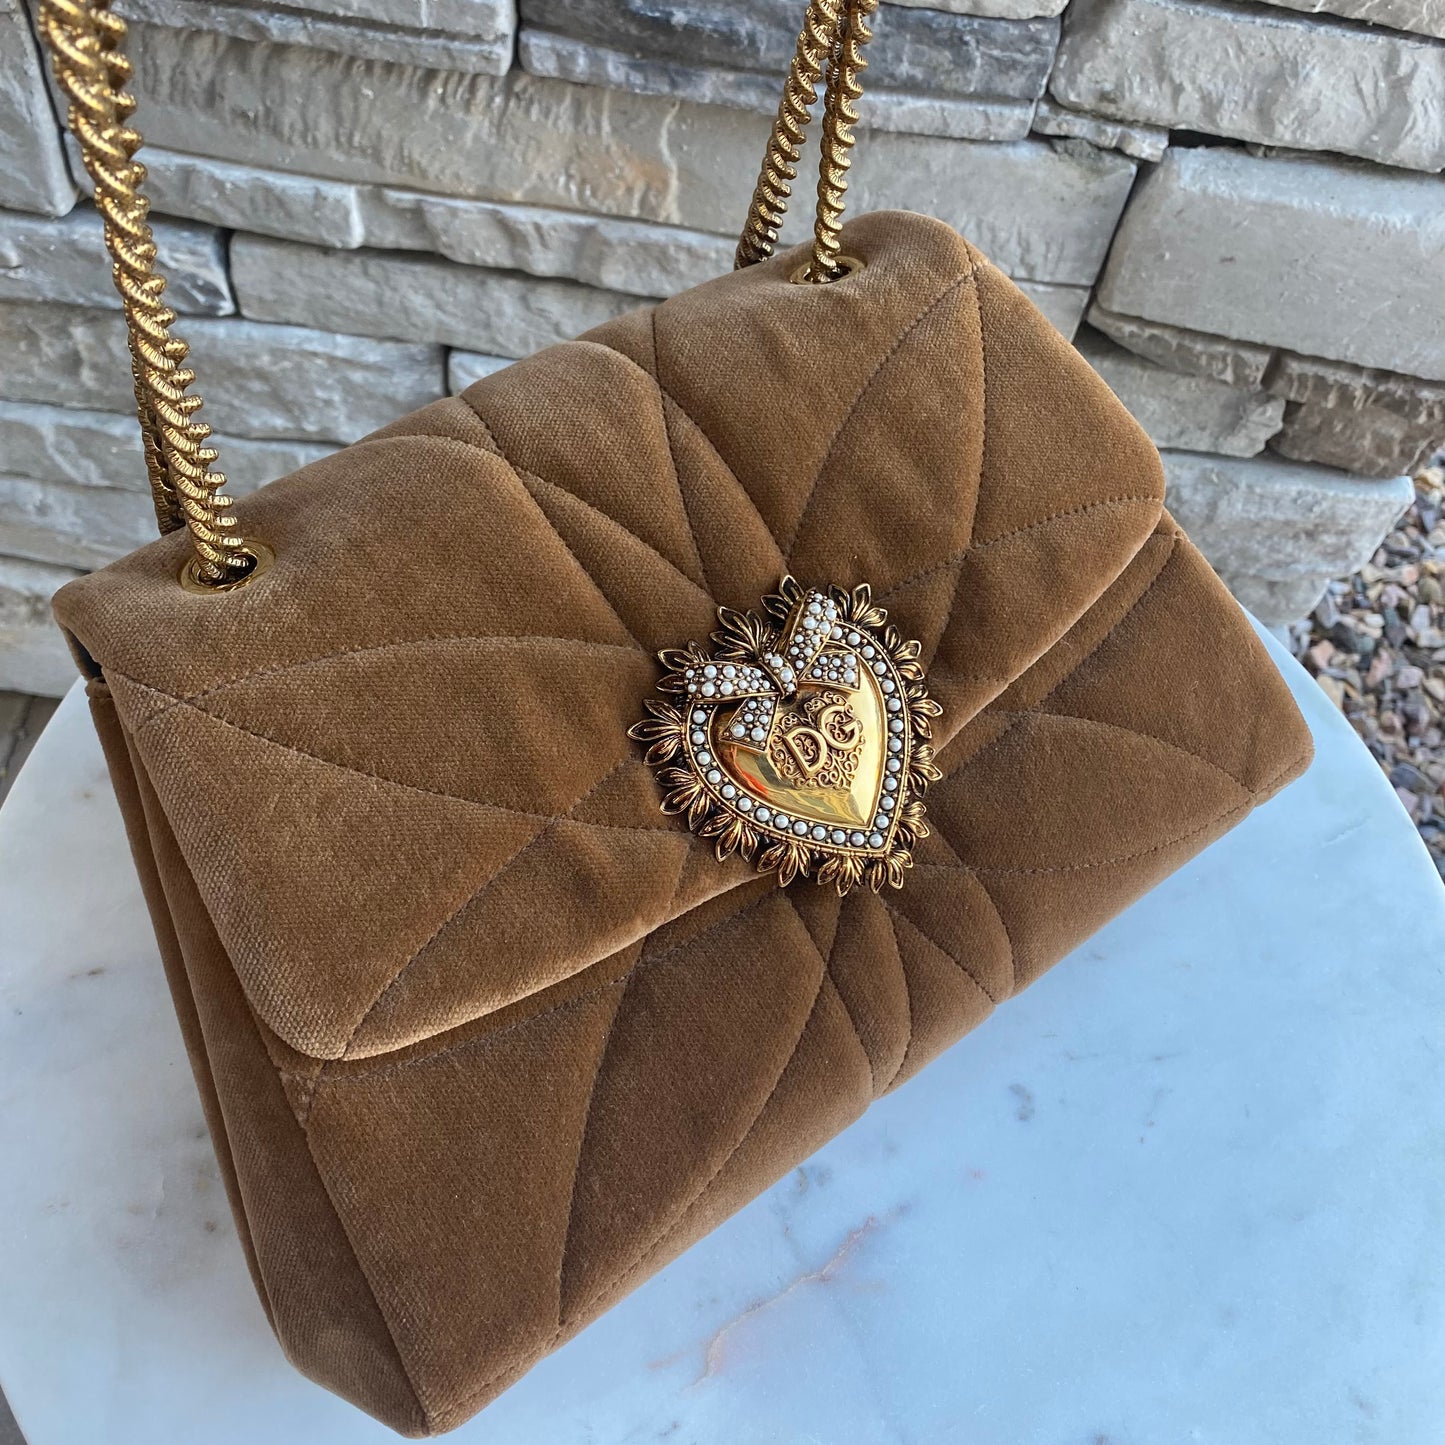 Dolce & Gabbana Velvet Devotion Envelope Shoulder Bag